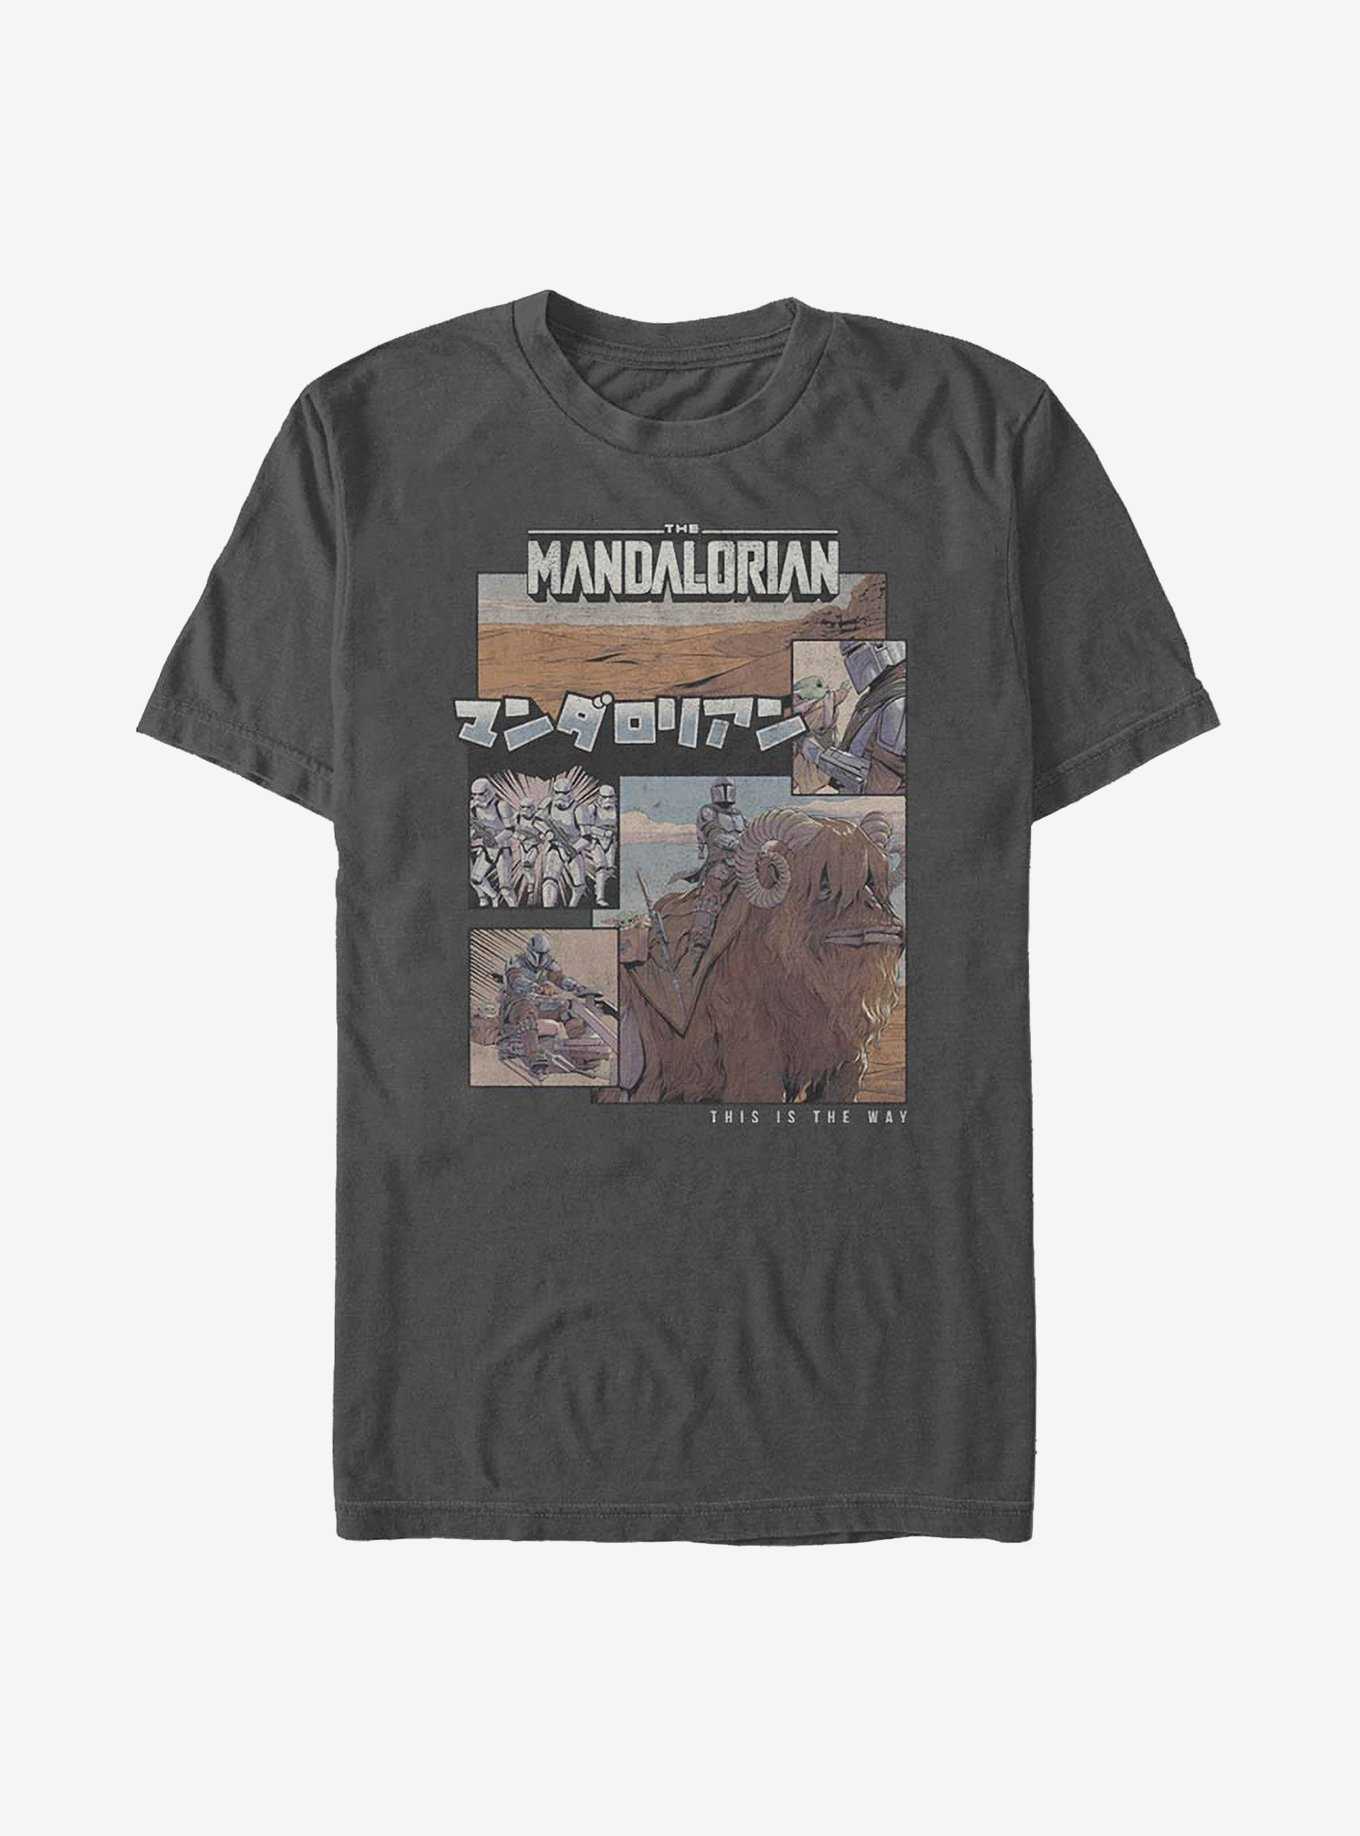 Star Wars The Mandalorian Mando Comic T-Shirt, , hi-res